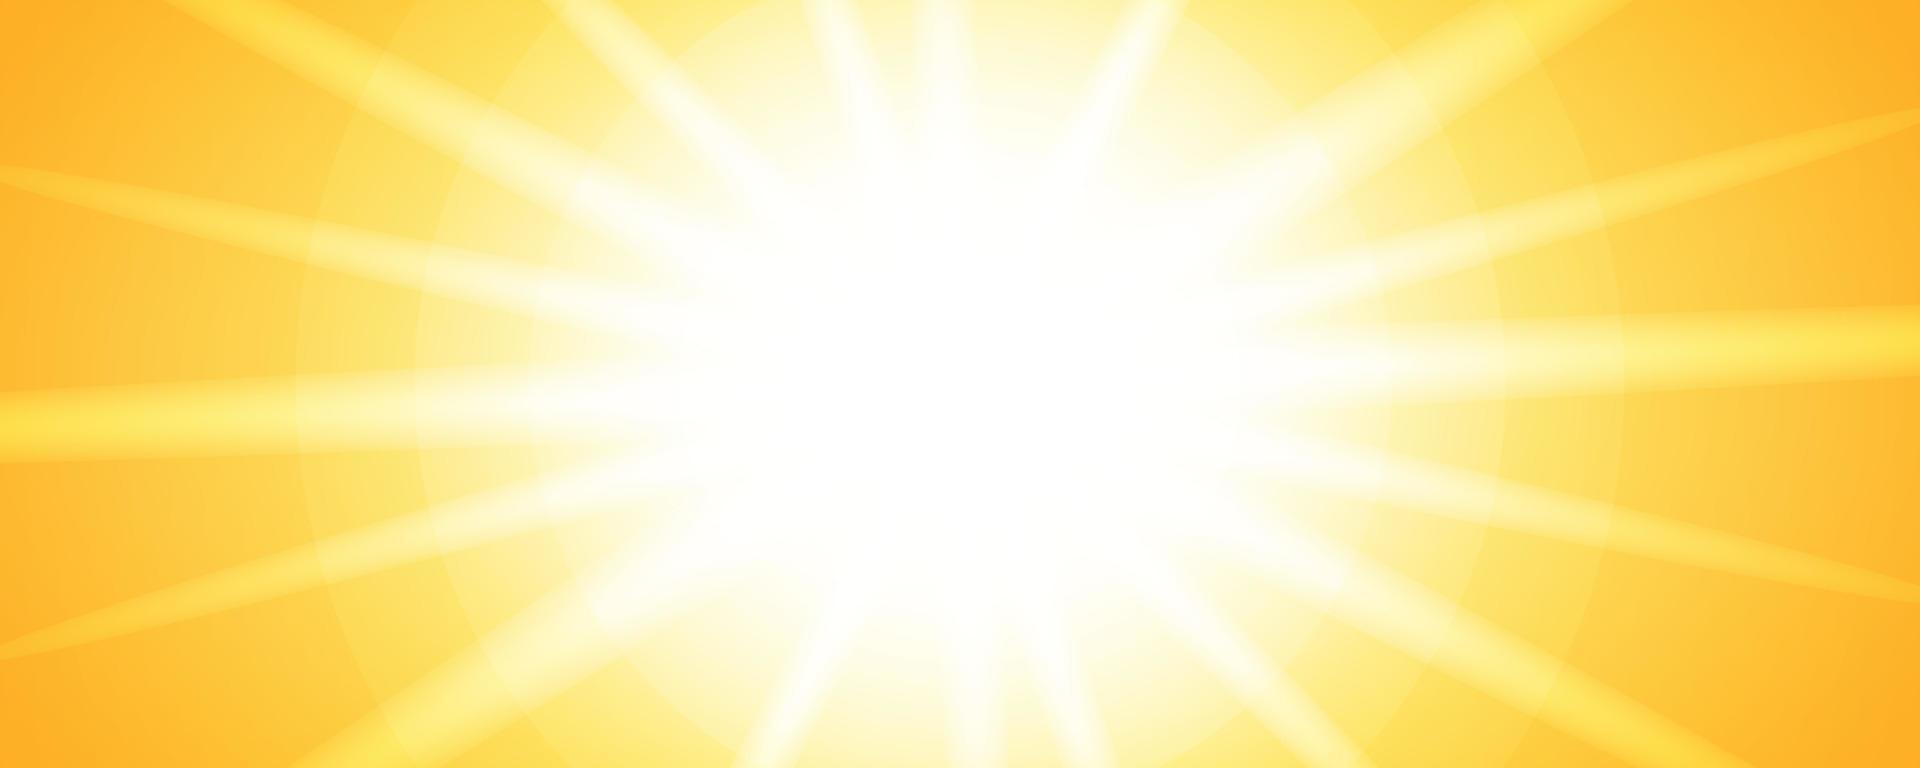 abstract zomerbannerontwerp met glanzende zonlicht vector